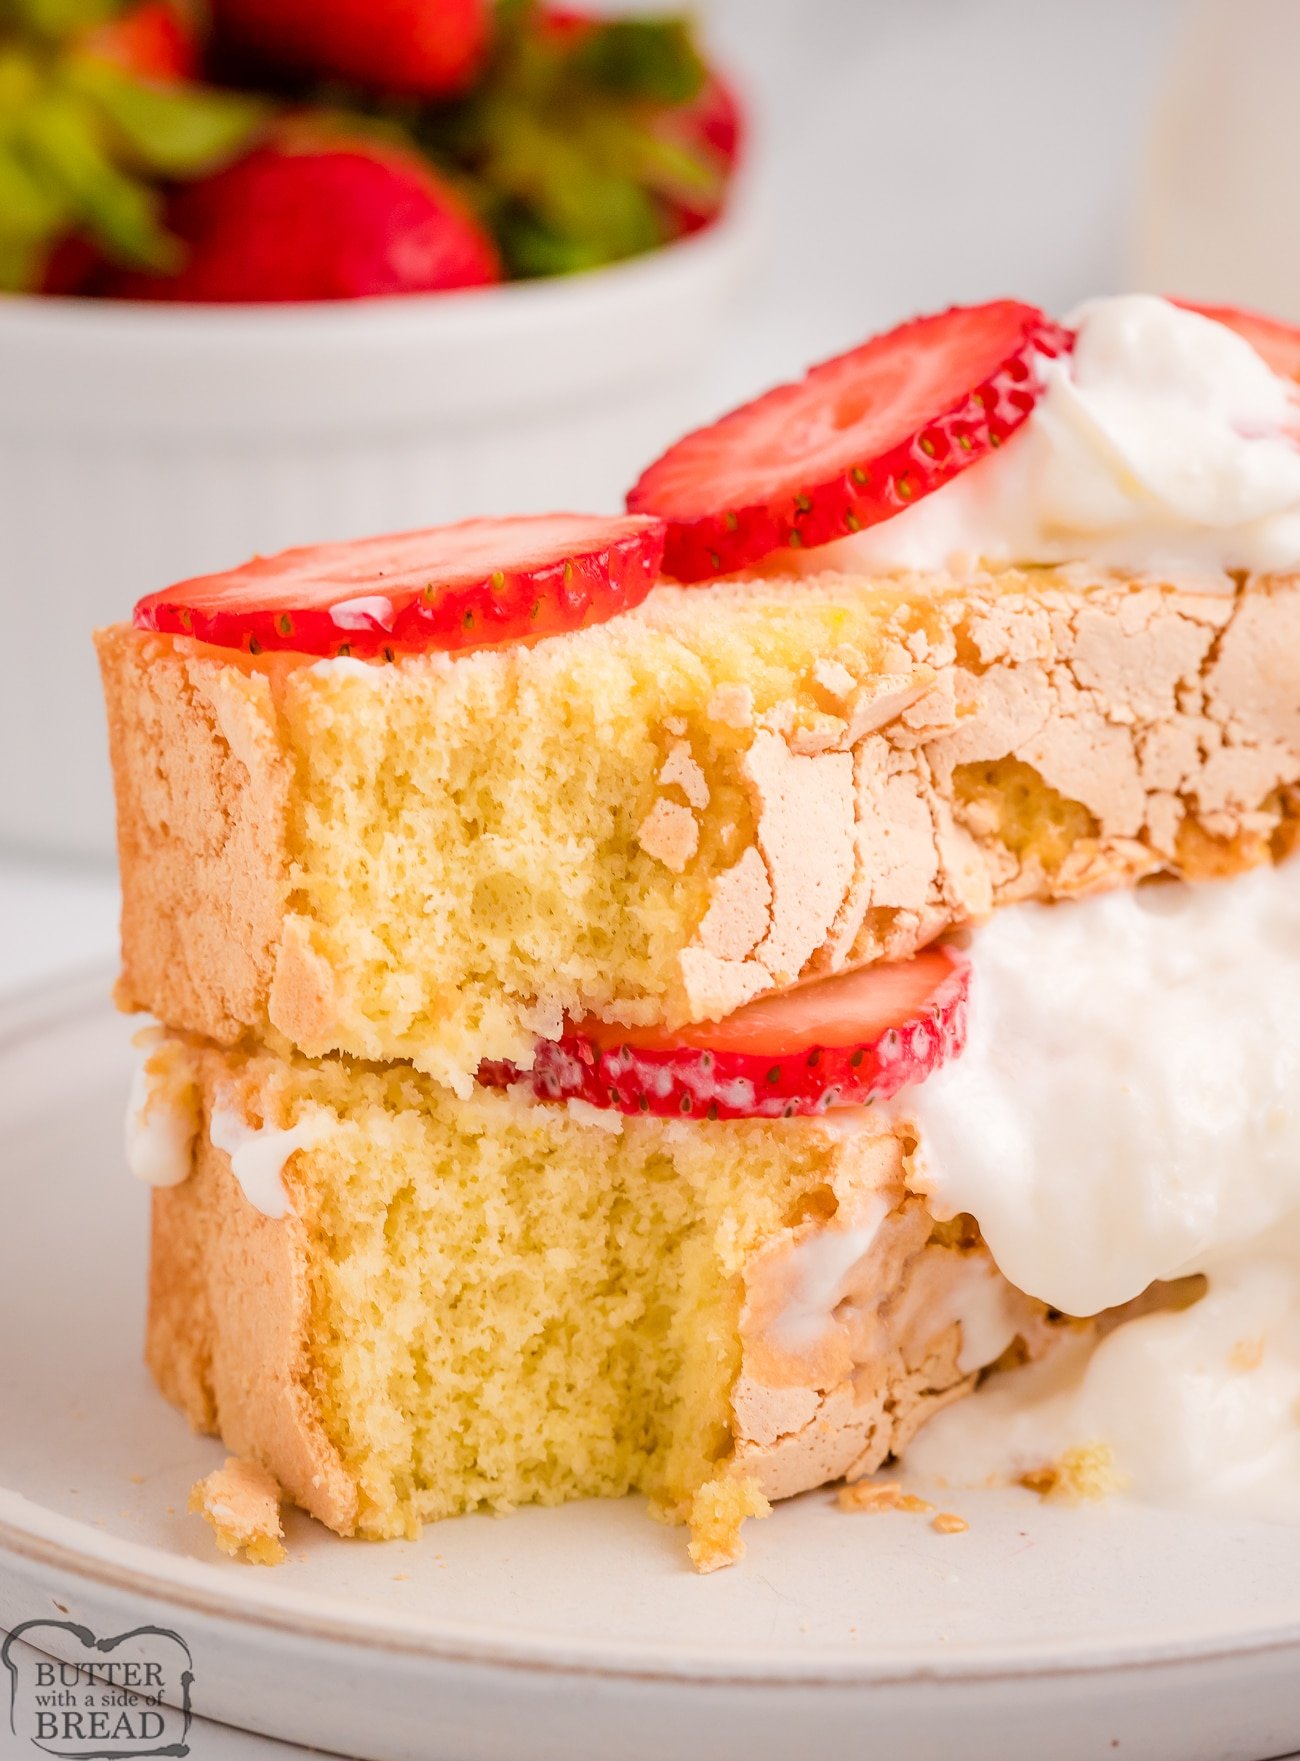 sponge cake with strawberries and cream